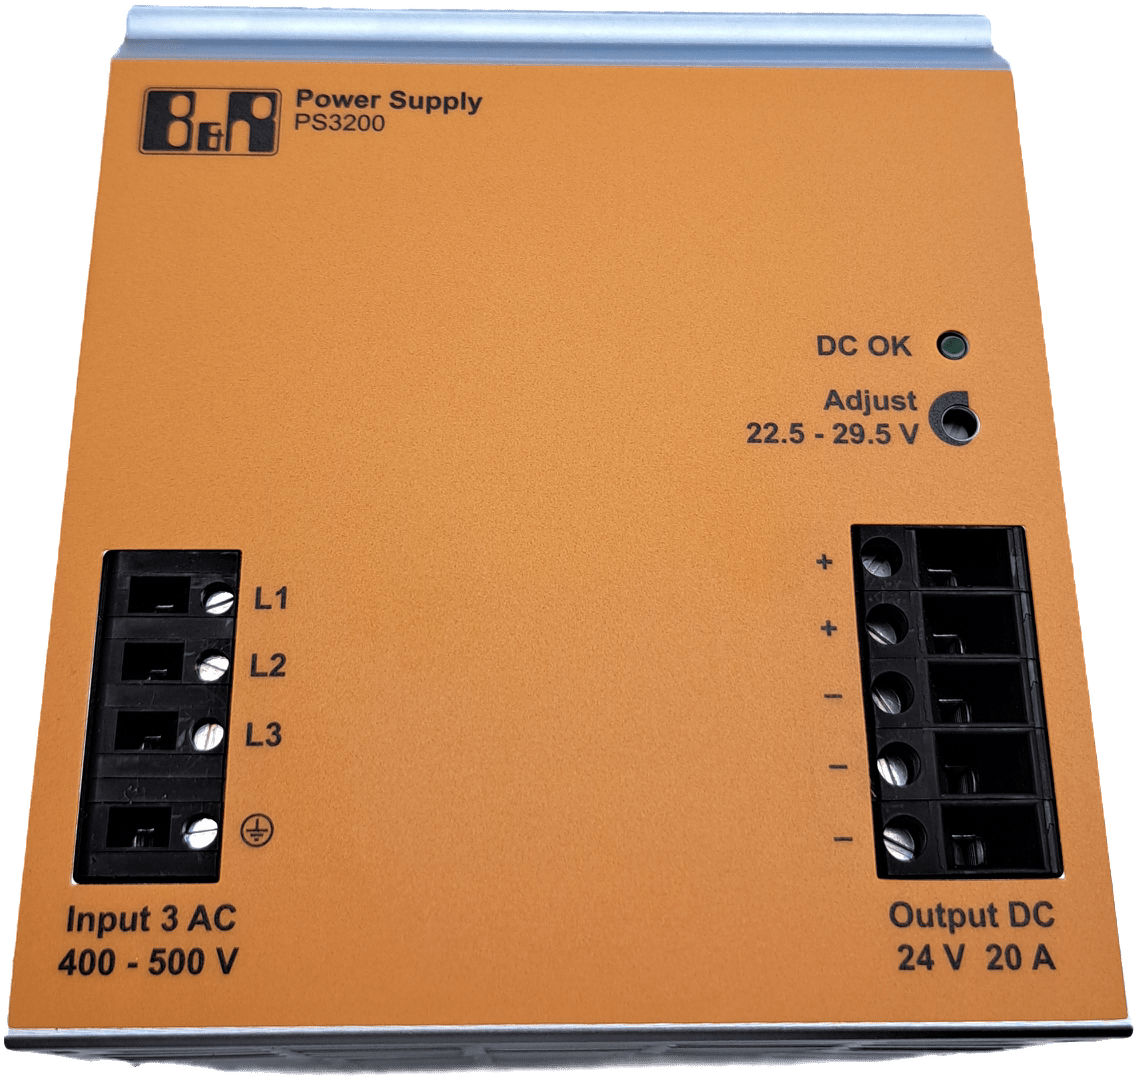 B&R 0PS3200.1 24 VDC Netzteil, 3-phasig, 20 A, Eingang 400 bis 500 VAC - #product_category# | Klenk Maschinenhandel